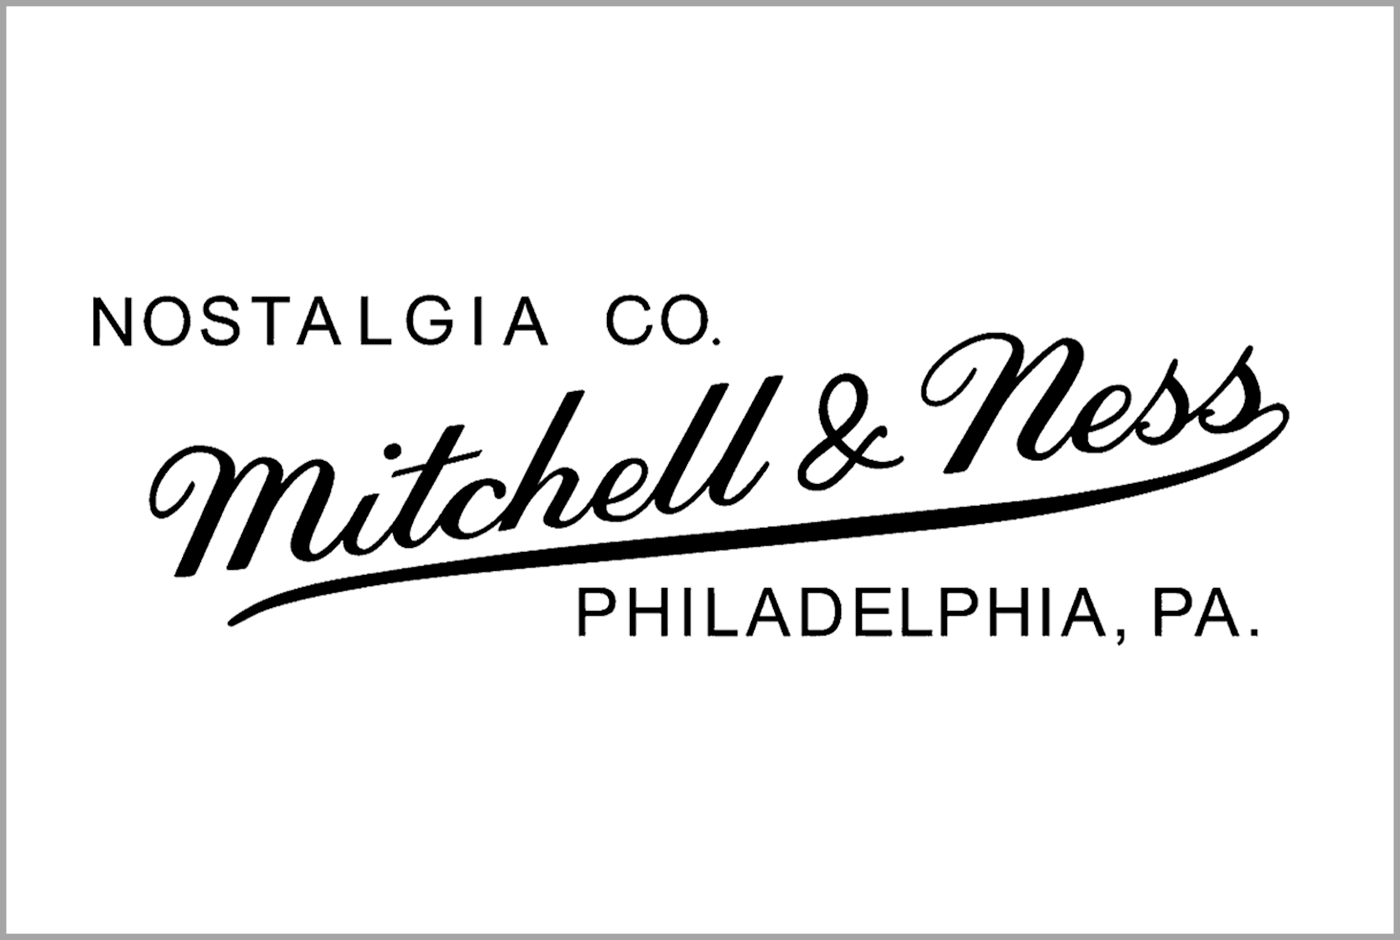 Mitchell-&-Ness-logo2.png